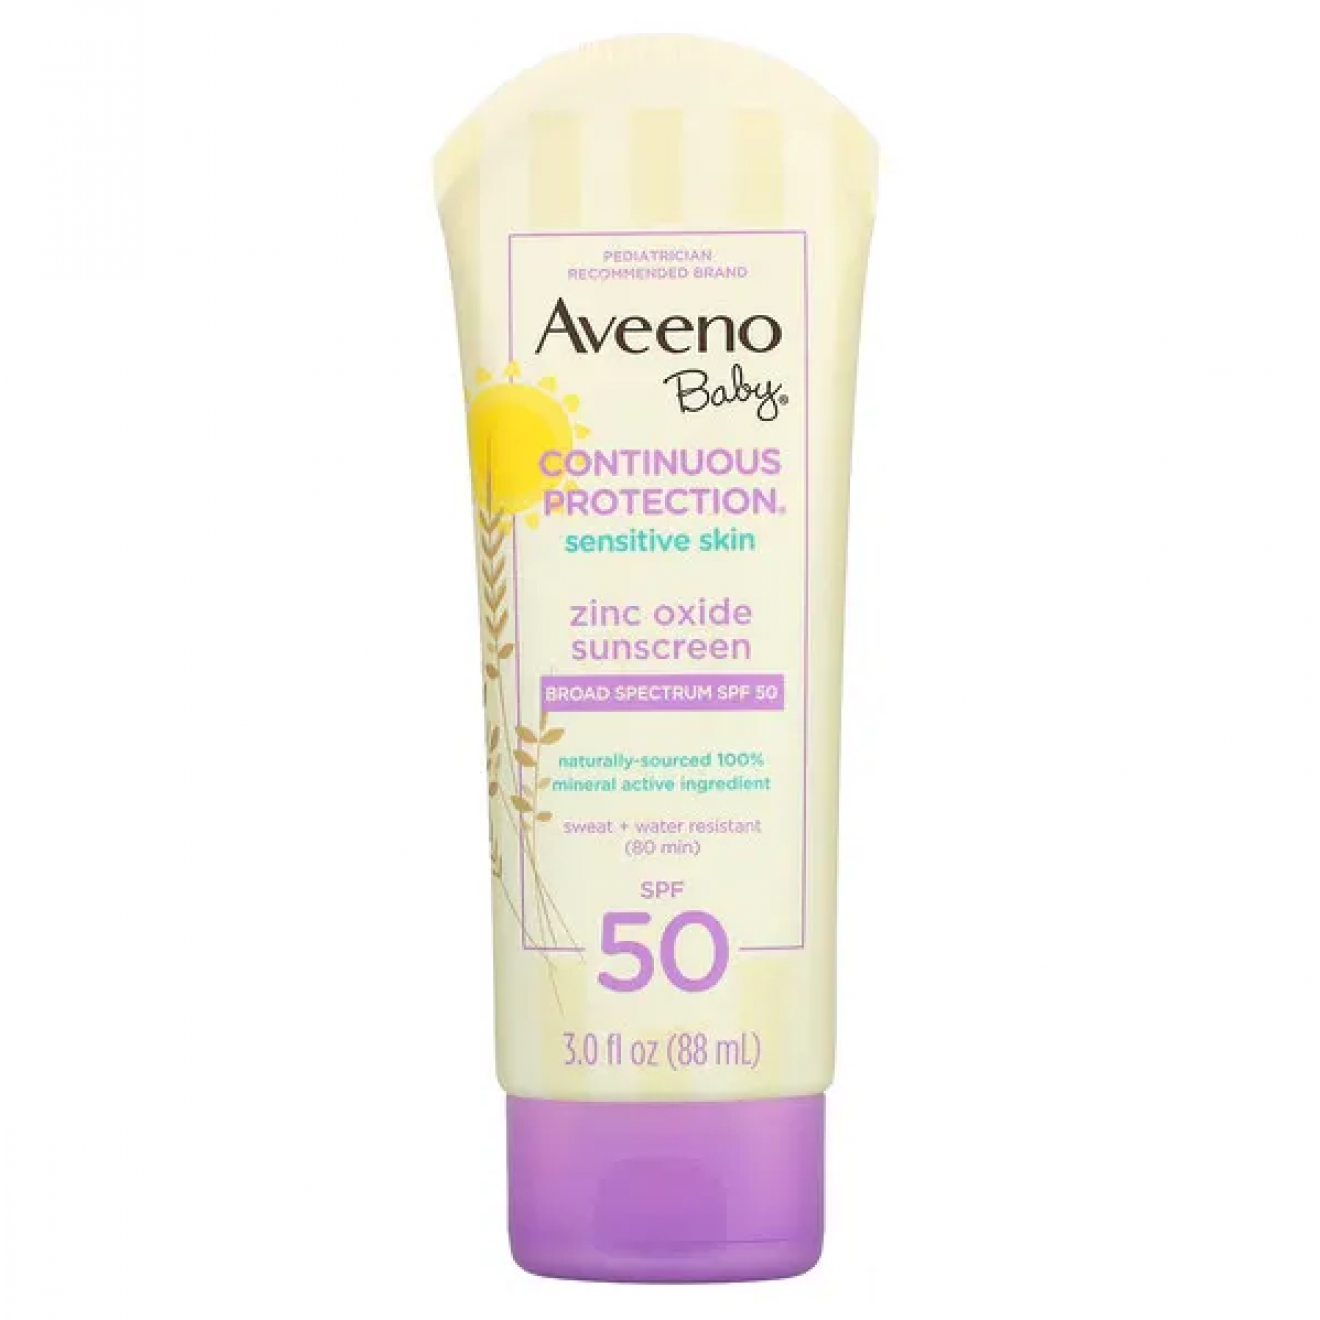 Aveeno, Baby, Zinc Oxide Sunscreen, SPF 50, 88 ml